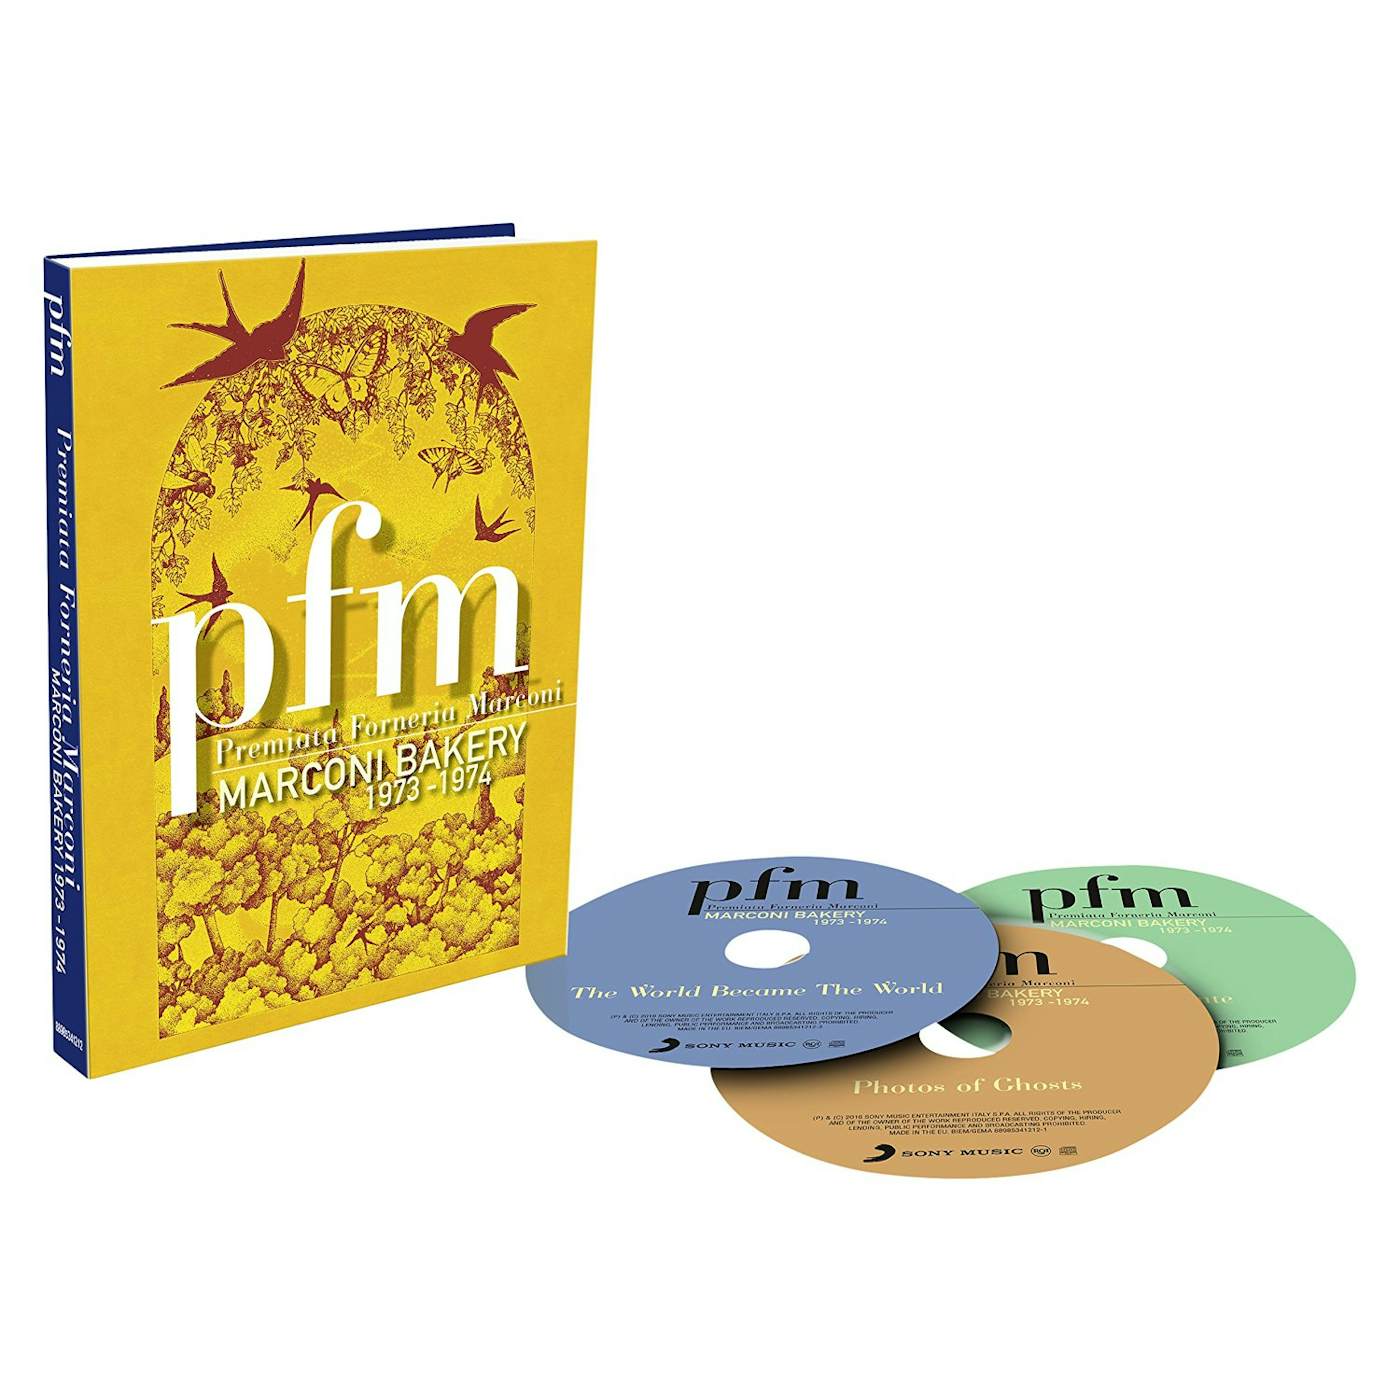 PFM MARCONI BAKERY 1973-1974 CD